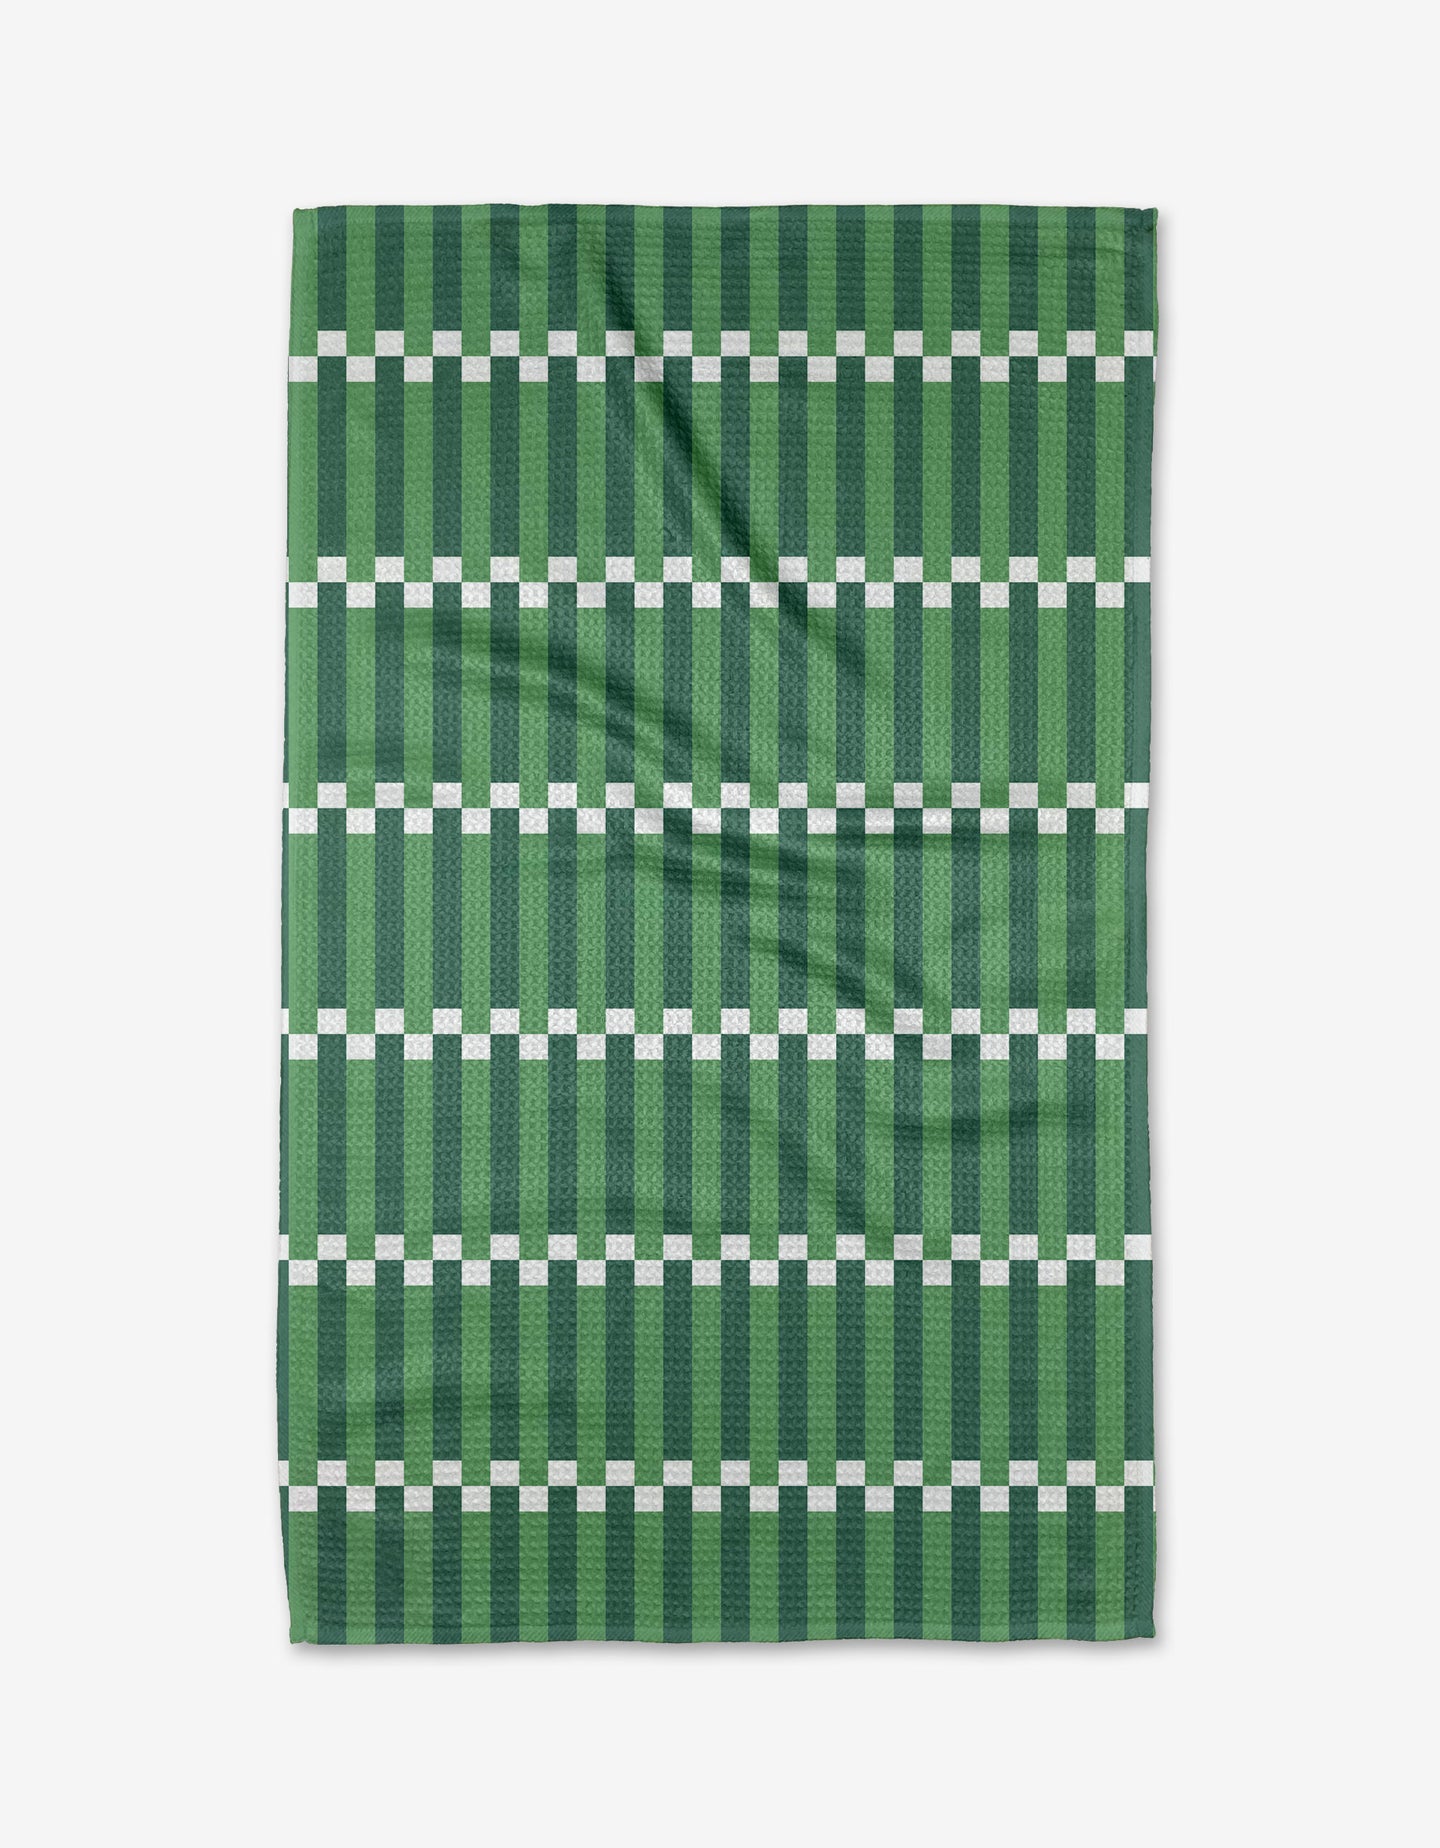 Stripe Block - Greens